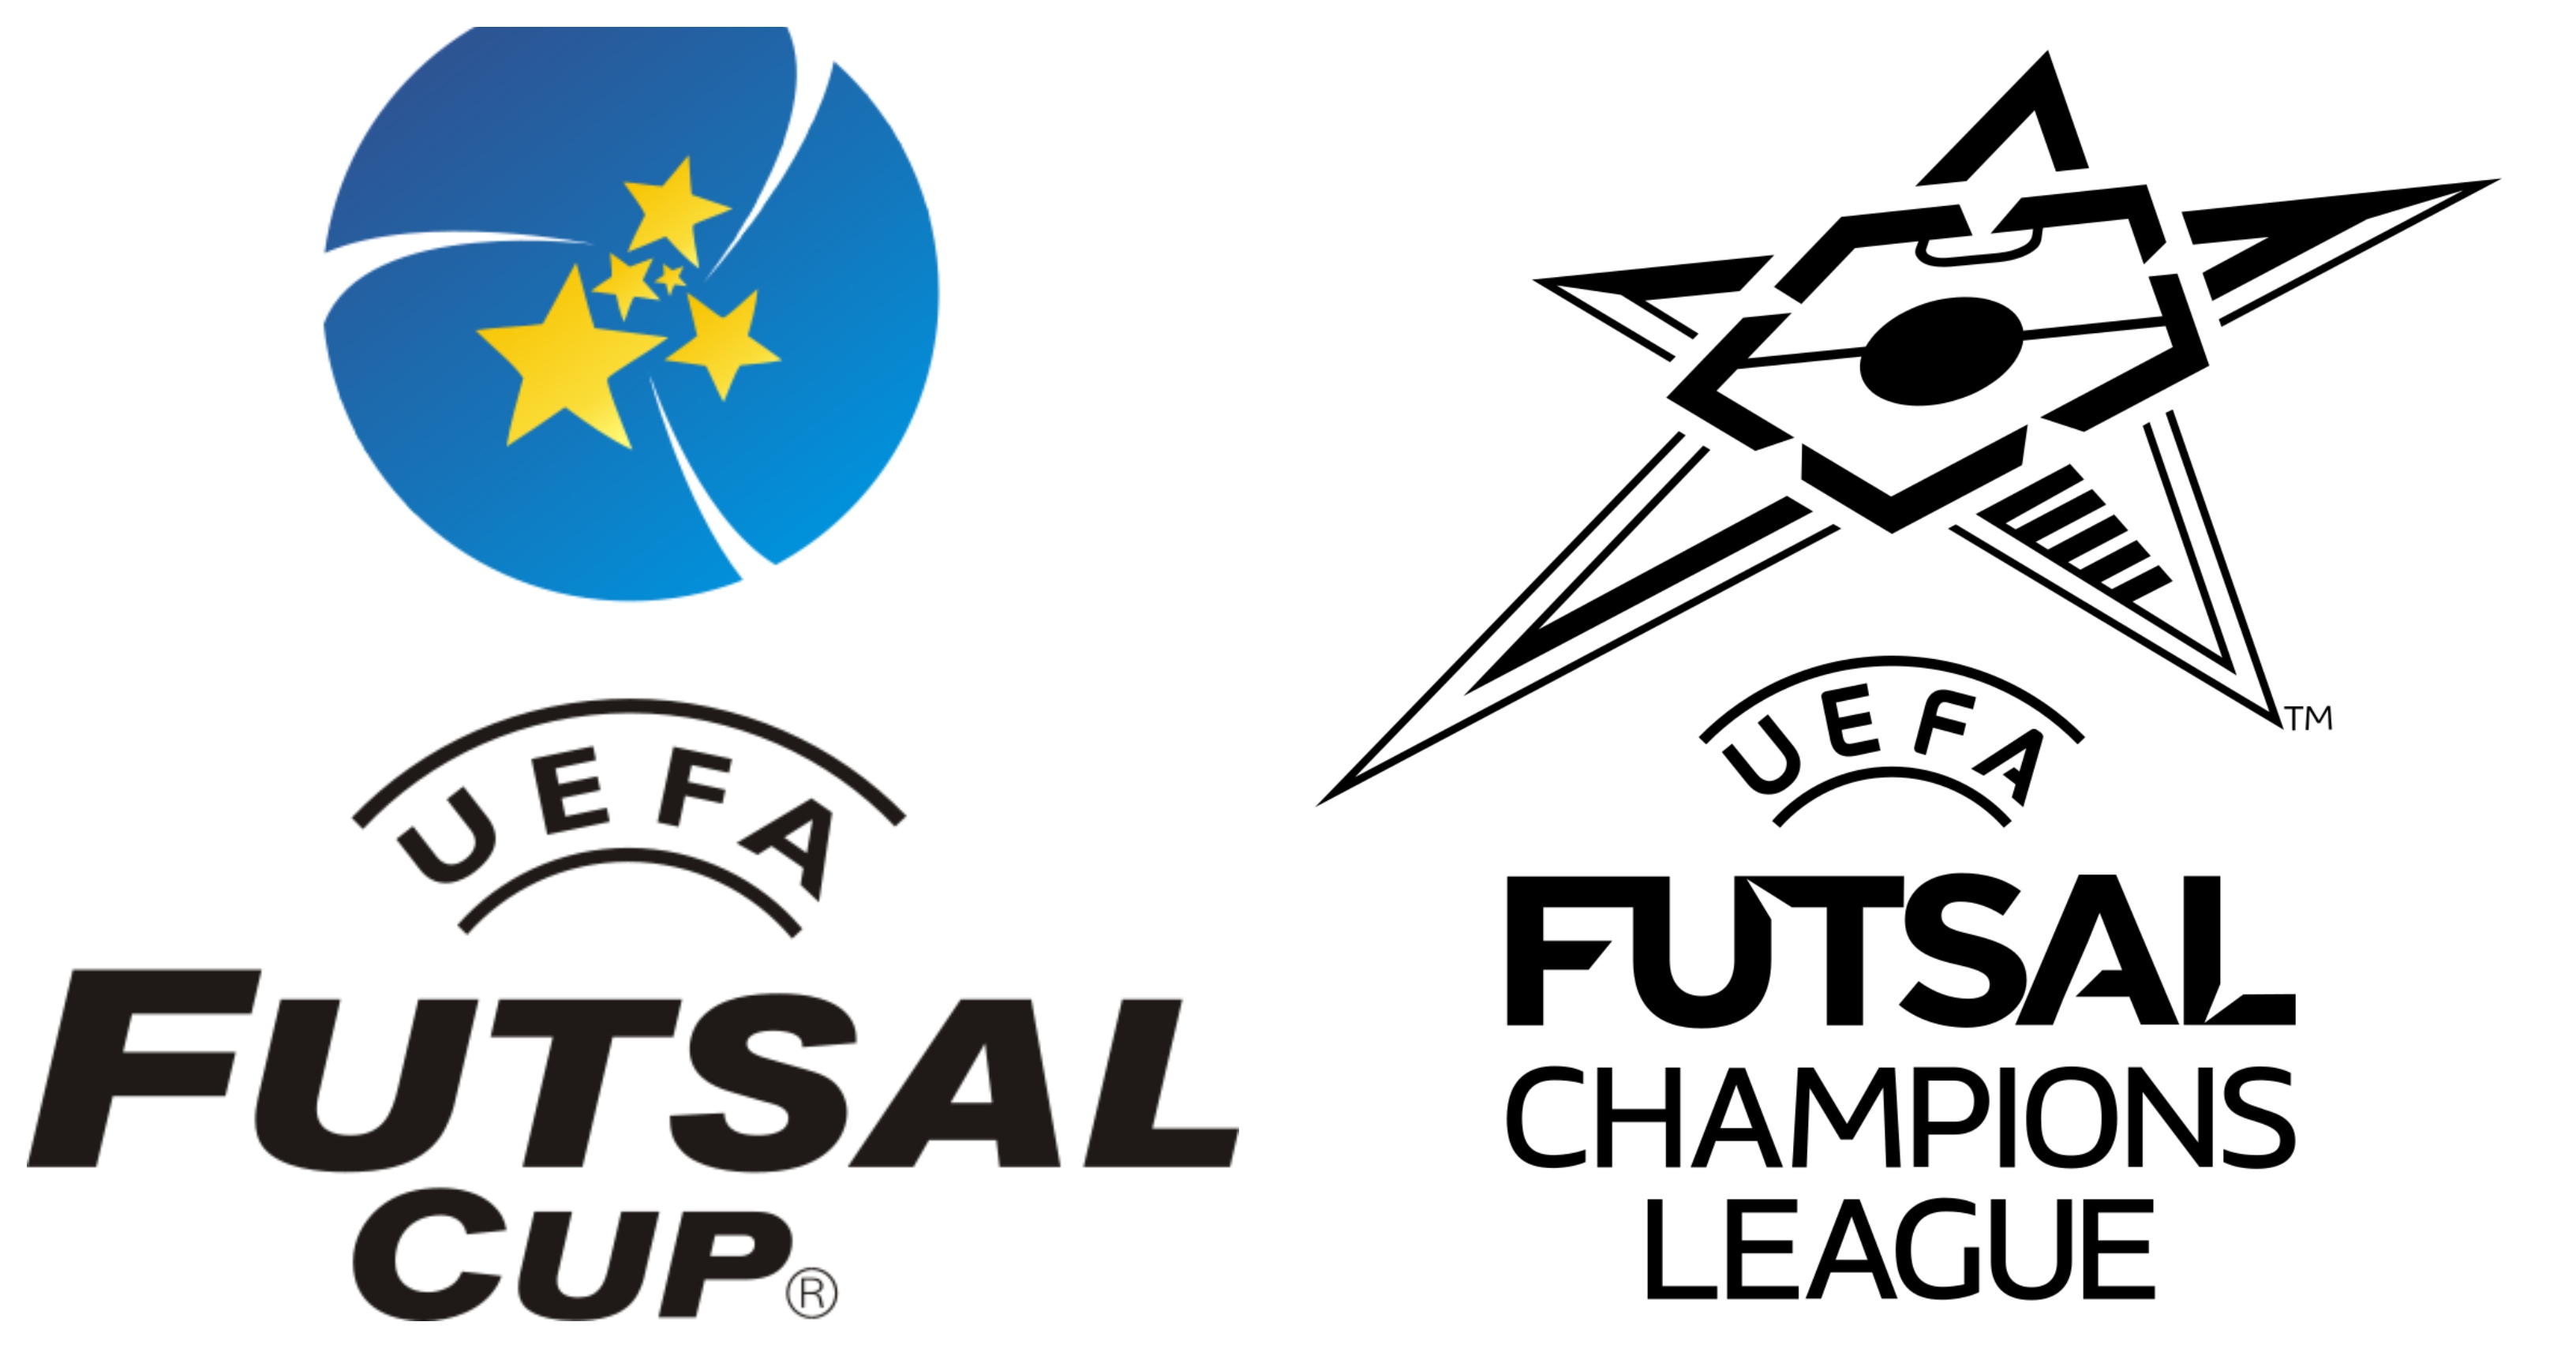 UEFA Futsal Champions League Logo